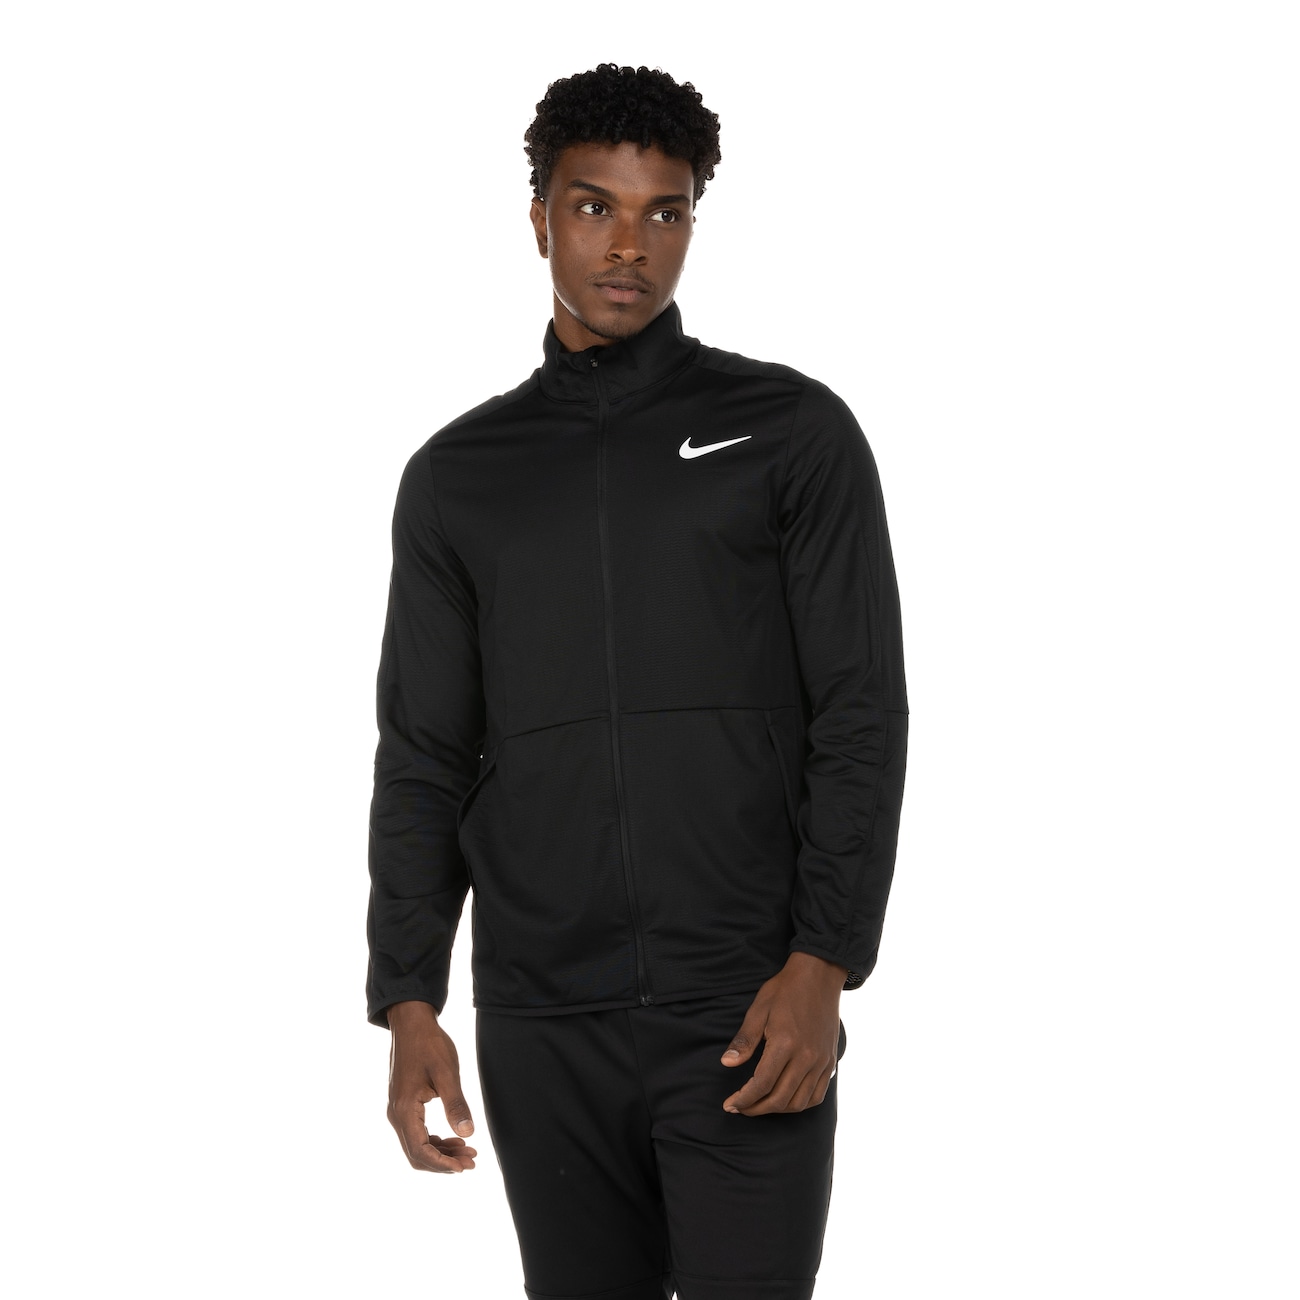 Buy Retro Black Nike Dri-fit Hooded Track Top/jacket Size Large Nike  Tracktop, Nike Track Jacket, Retro Style Online in India - Etsy